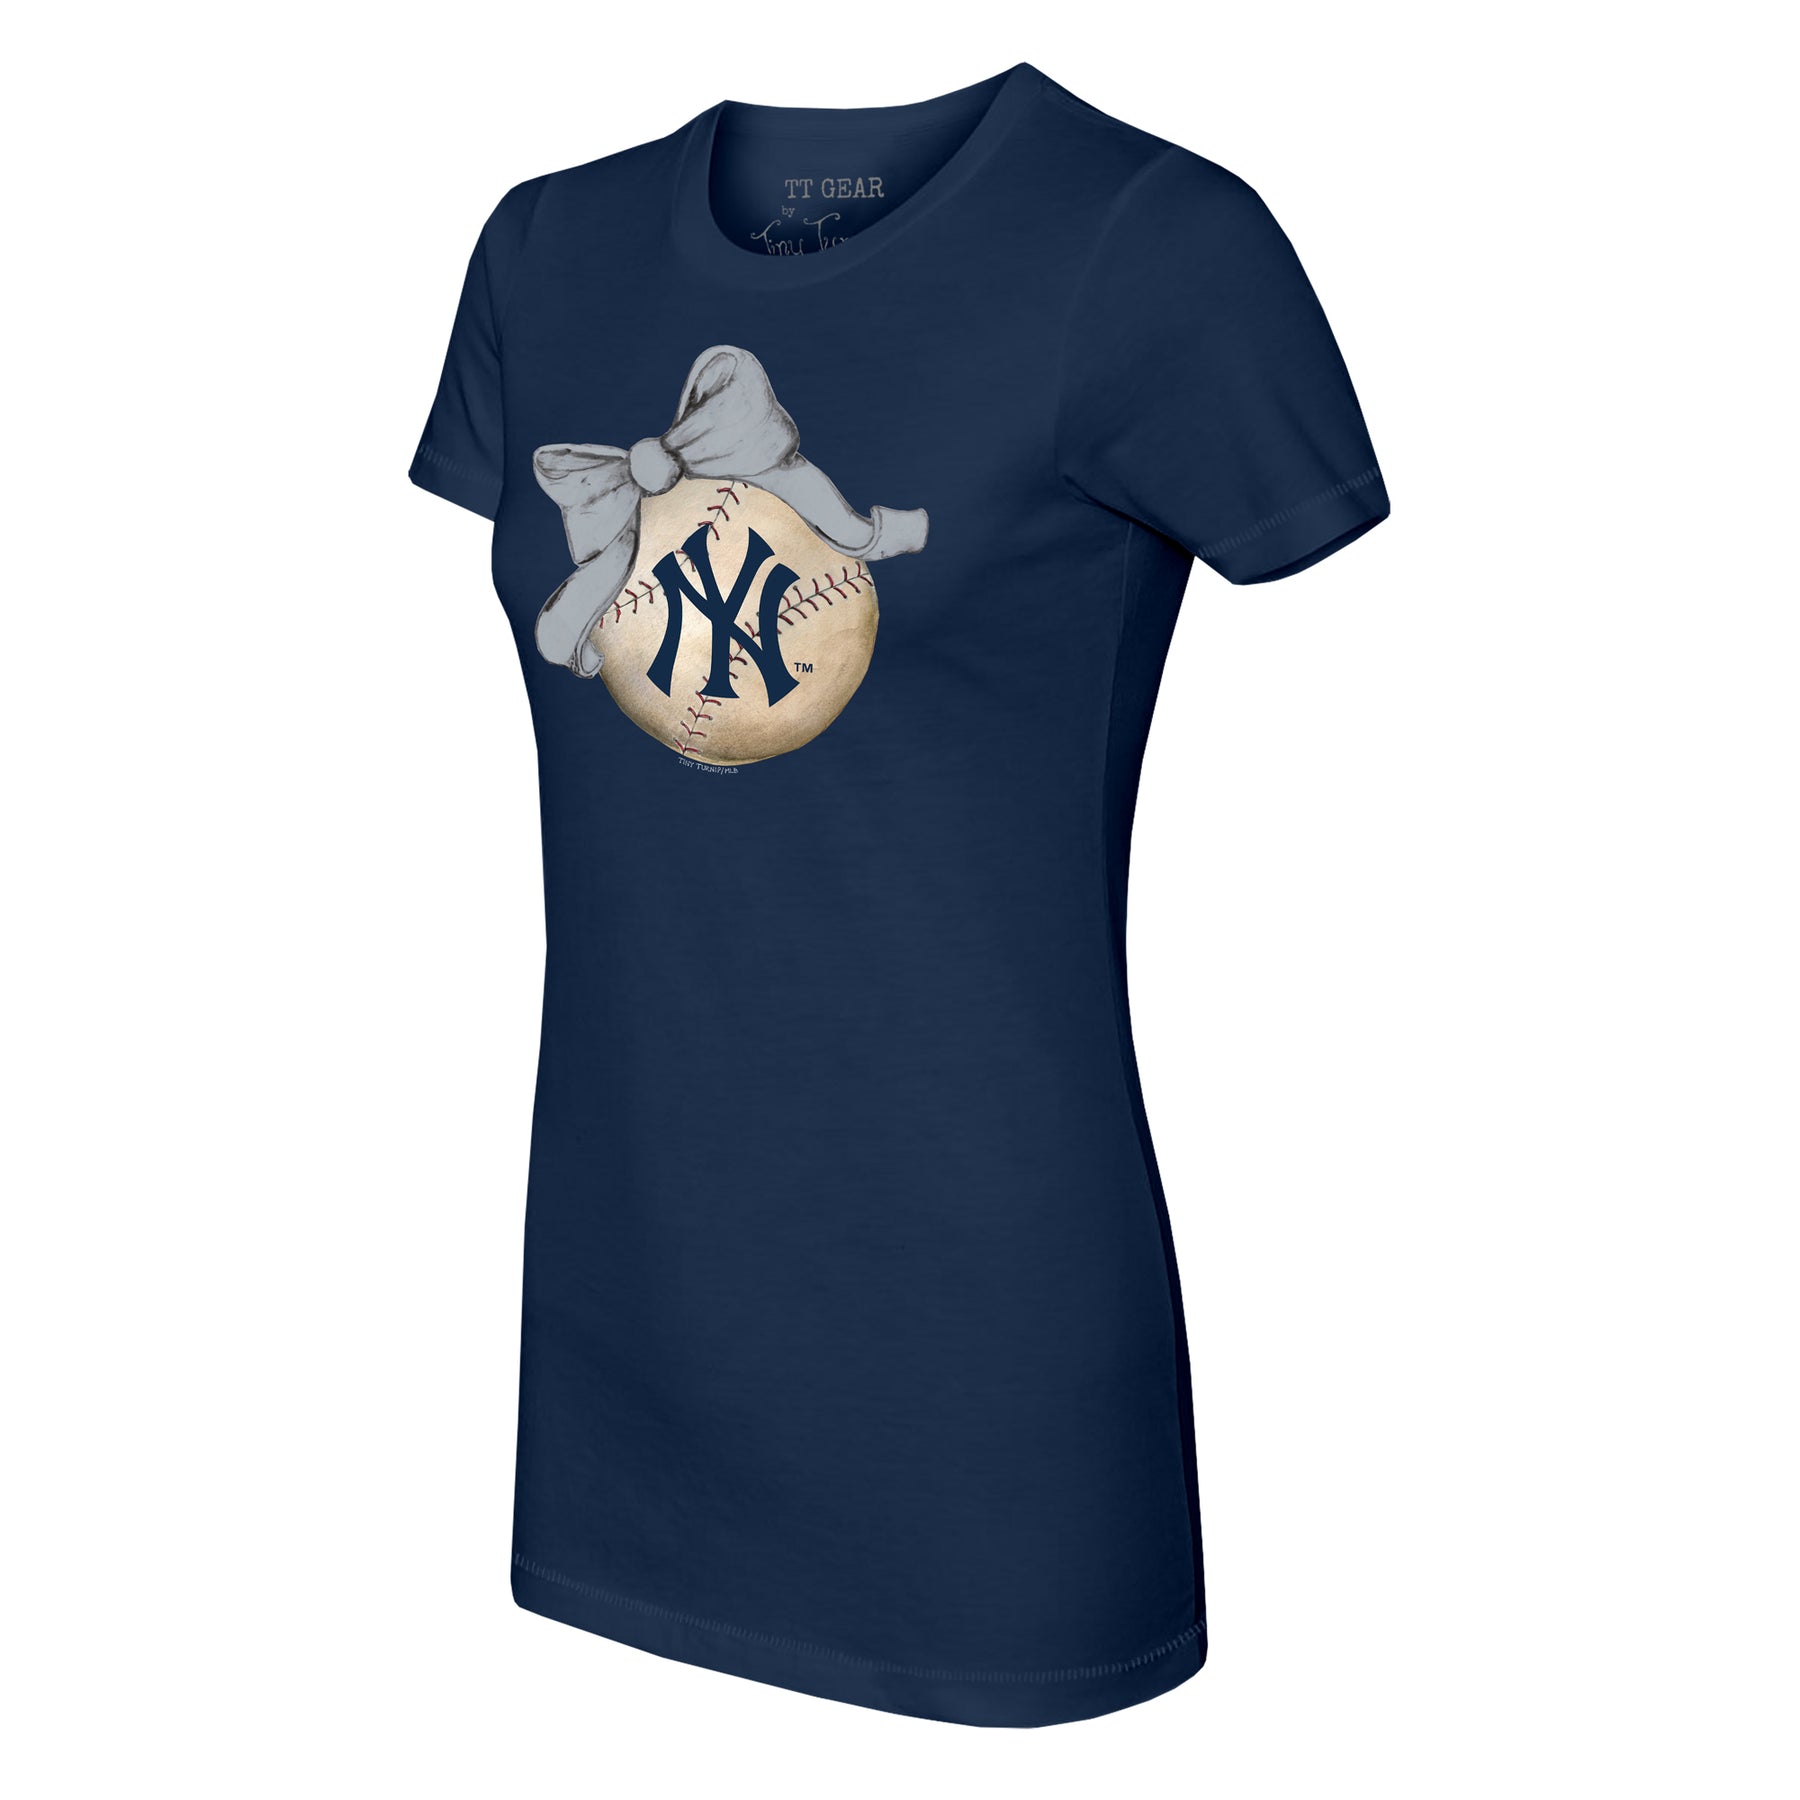 Official Ladies New York Yankees Jerseys, Yankees Ladies Baseball